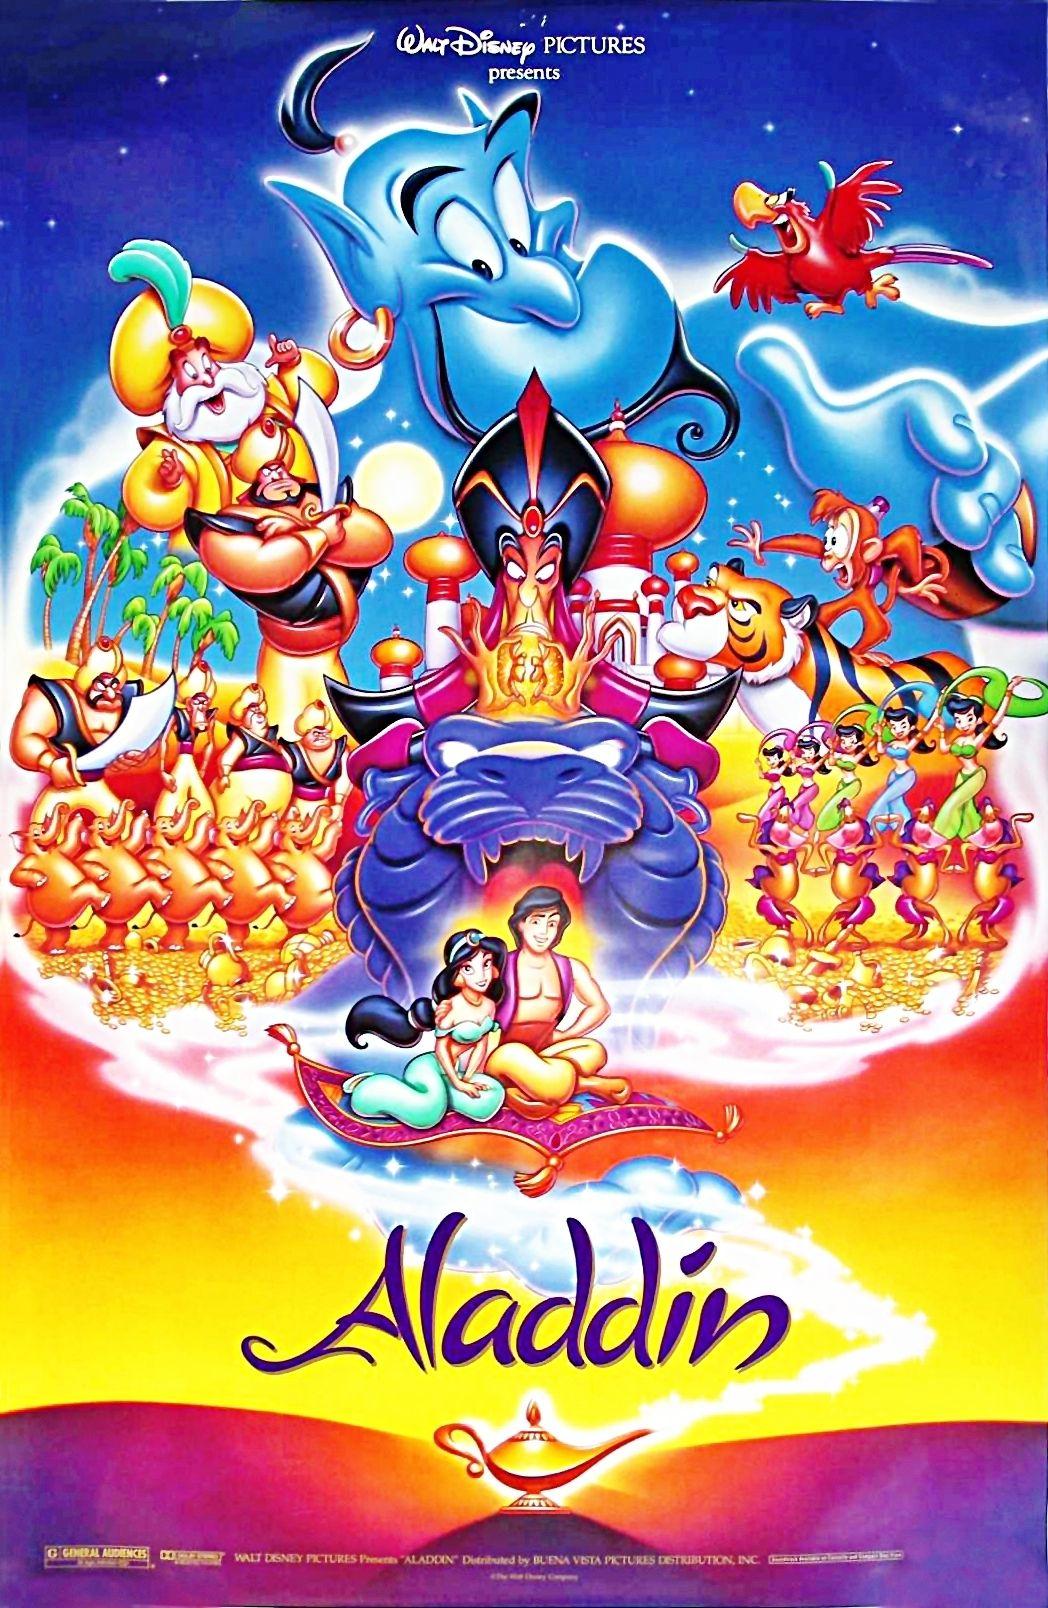 Aladdin Poster disney picture, Aladdin Poster disney image